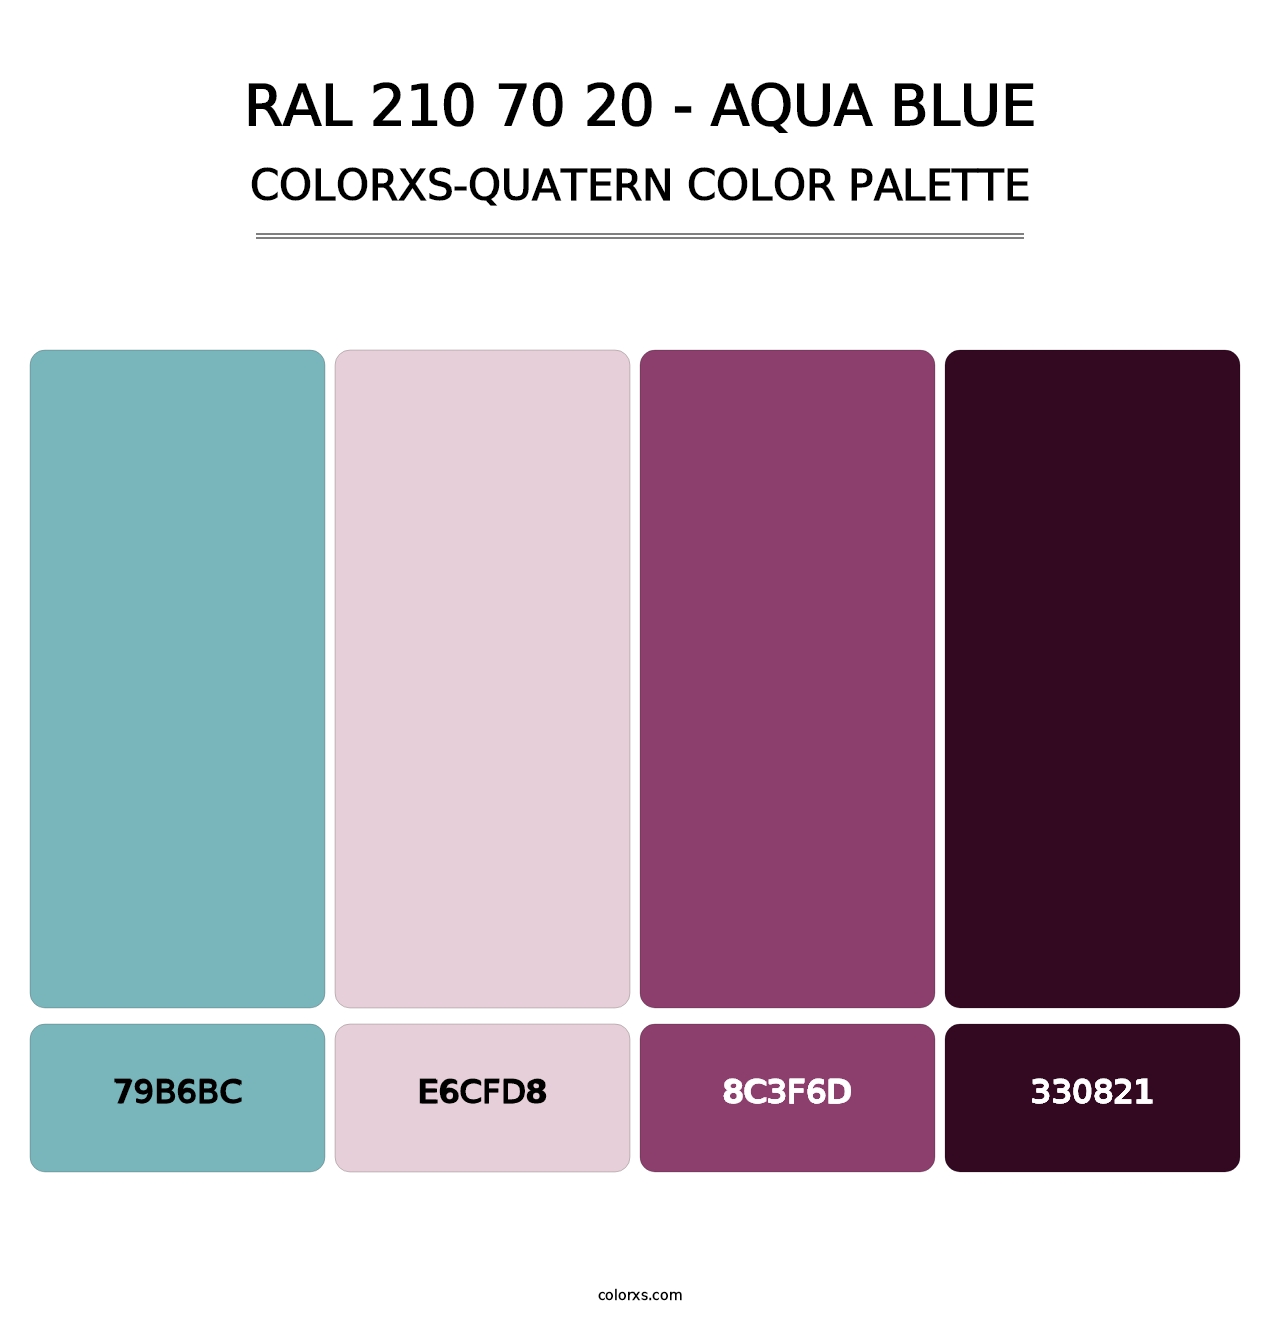 RAL 210 70 20 - Aqua Blue - Colorxs Quatern Palette